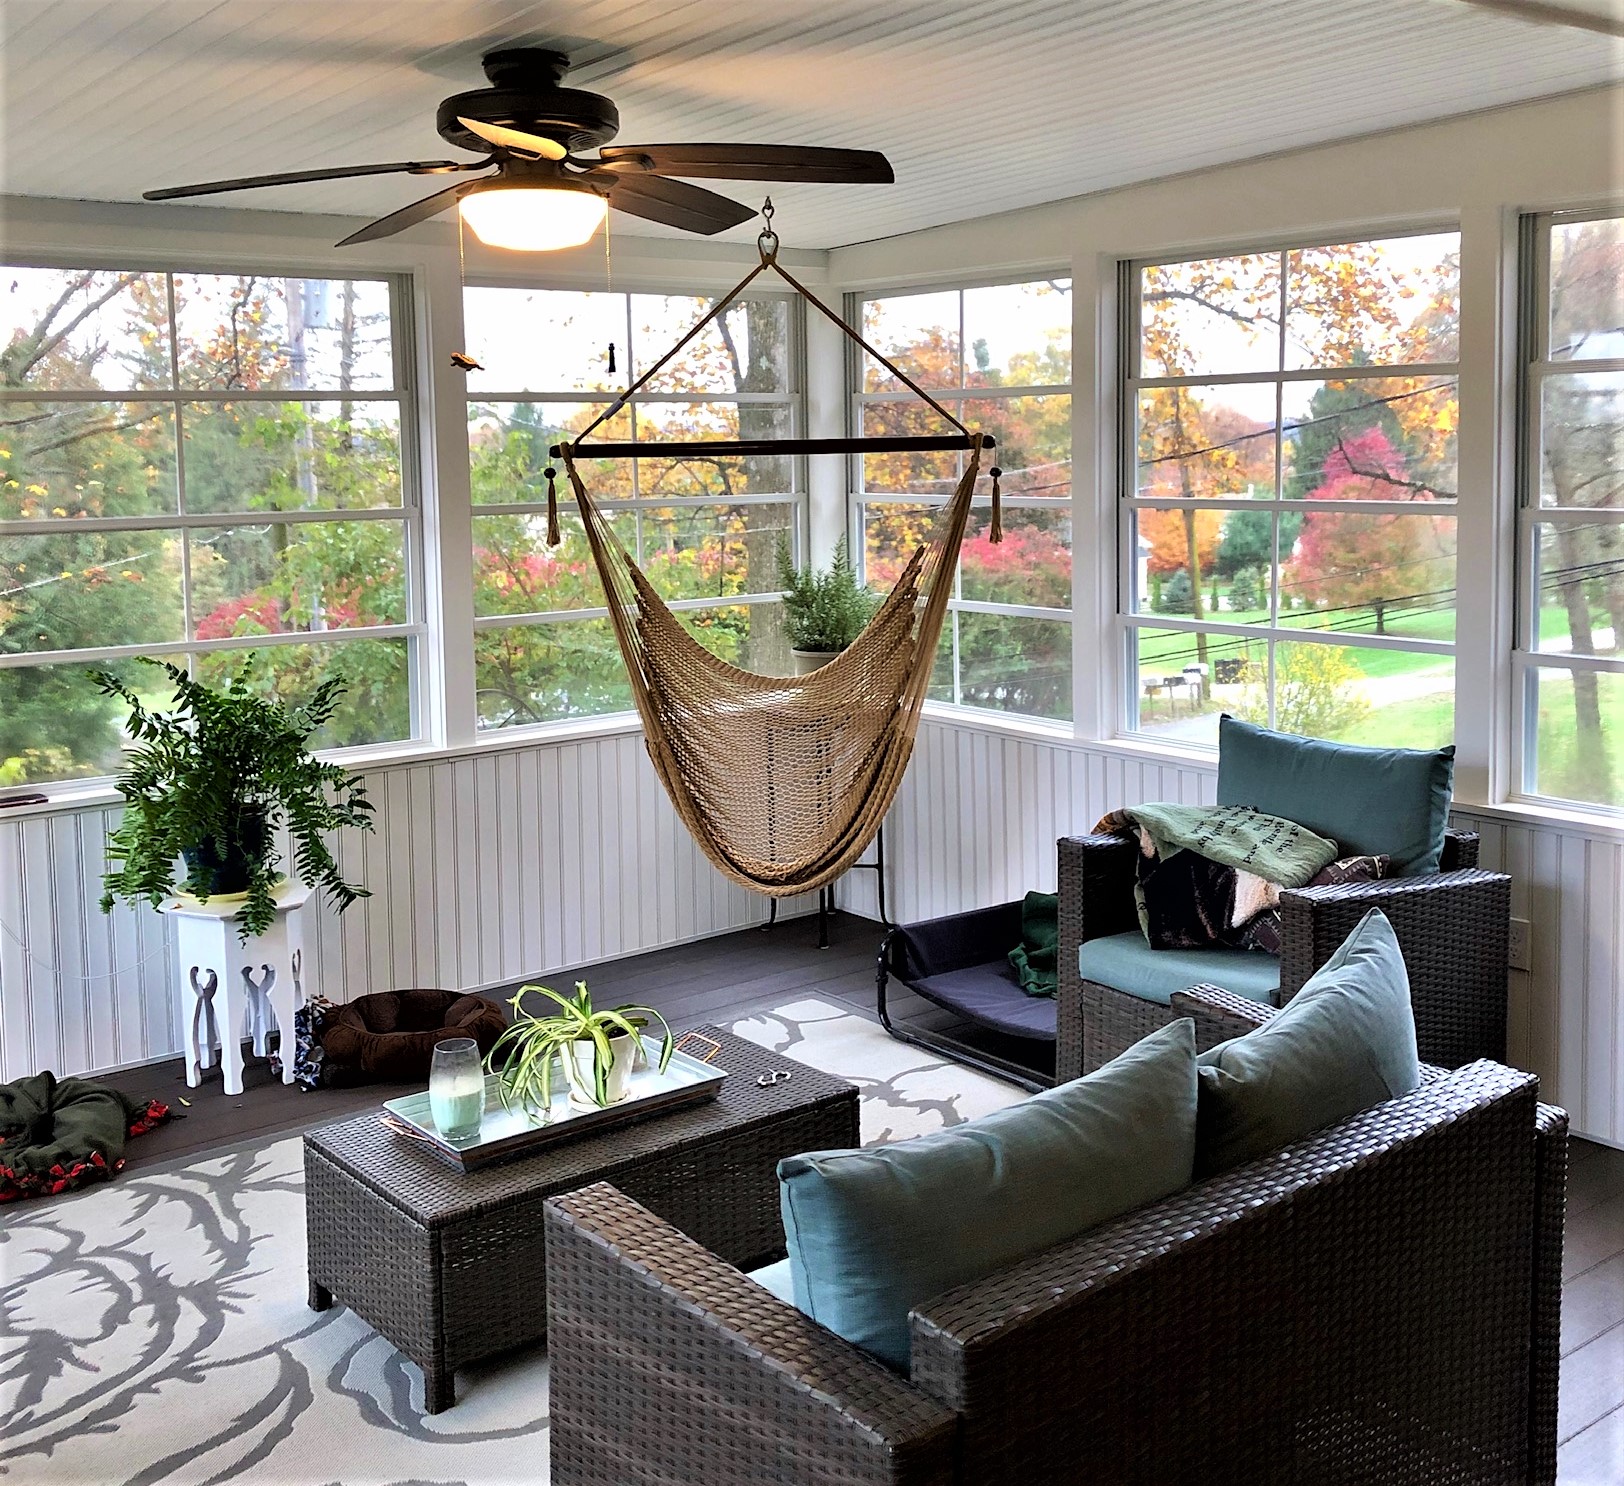 Sun room with a hammock, fan, and wicker furniture